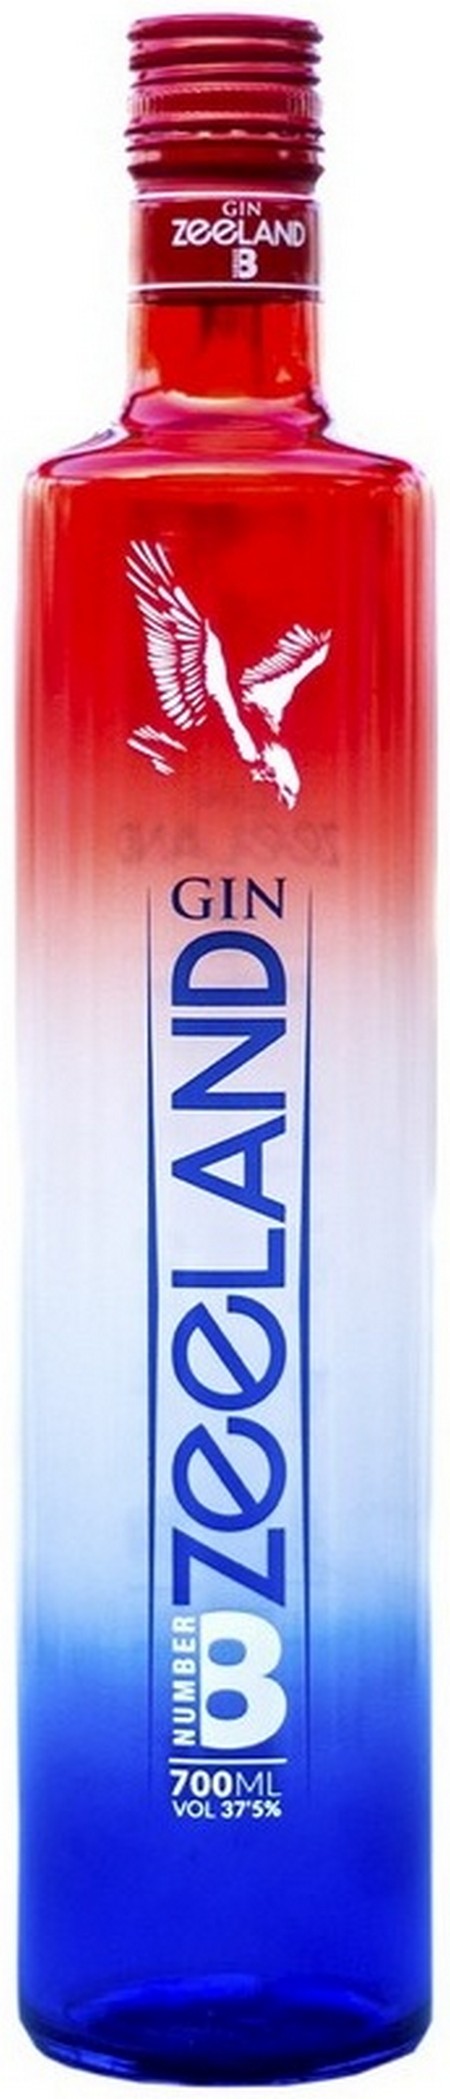 gin-zeeland-